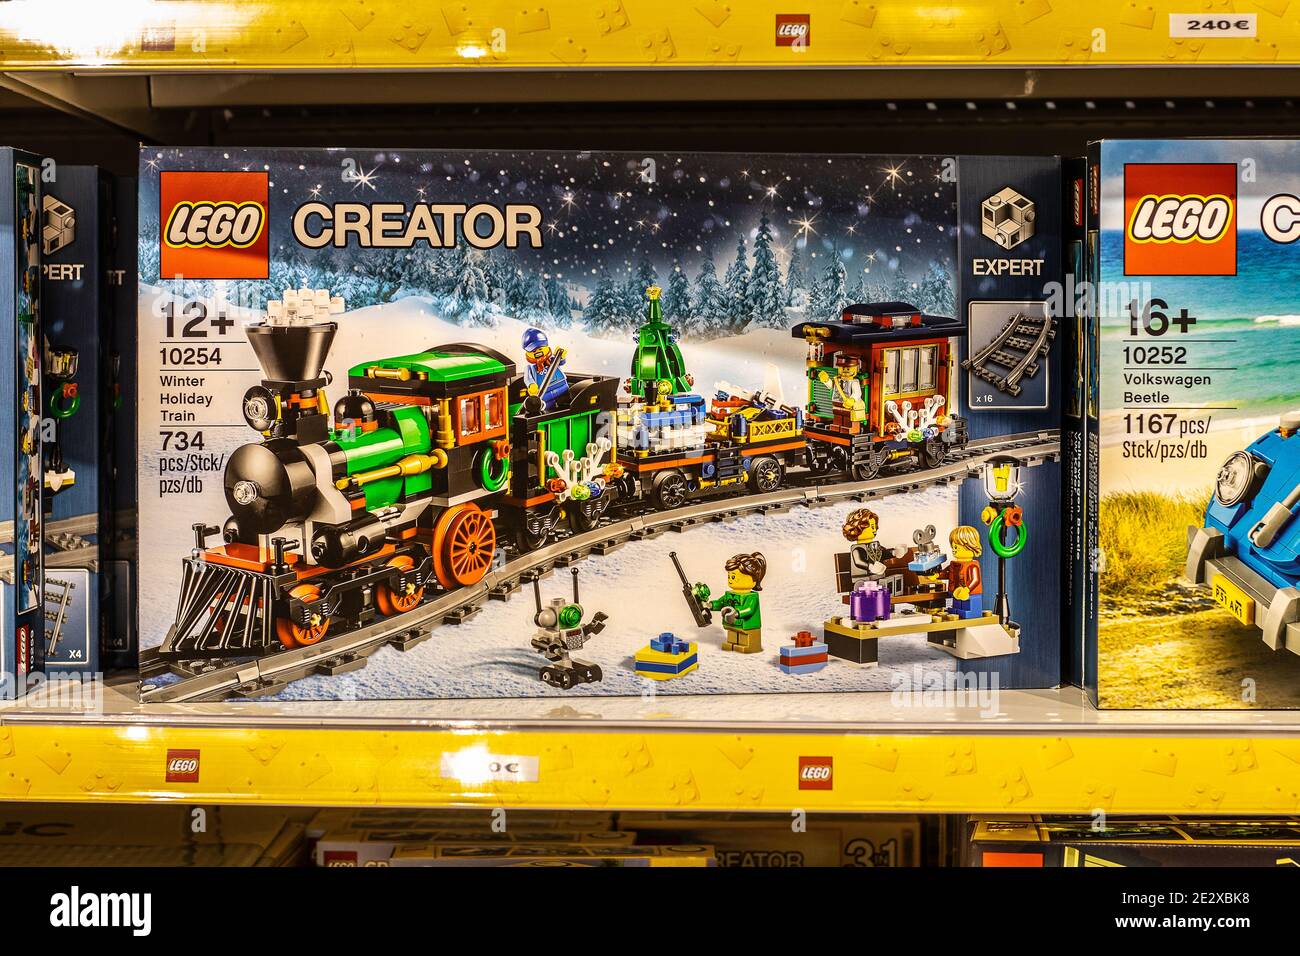 Lego box on the shop display for sale, Lego Star Wars, Speed, Super Heroes,  City, Juniors, Classic, Duplo, Creator, Technic, Friends, Ninjago, Elves  Stock Photo - Alamy